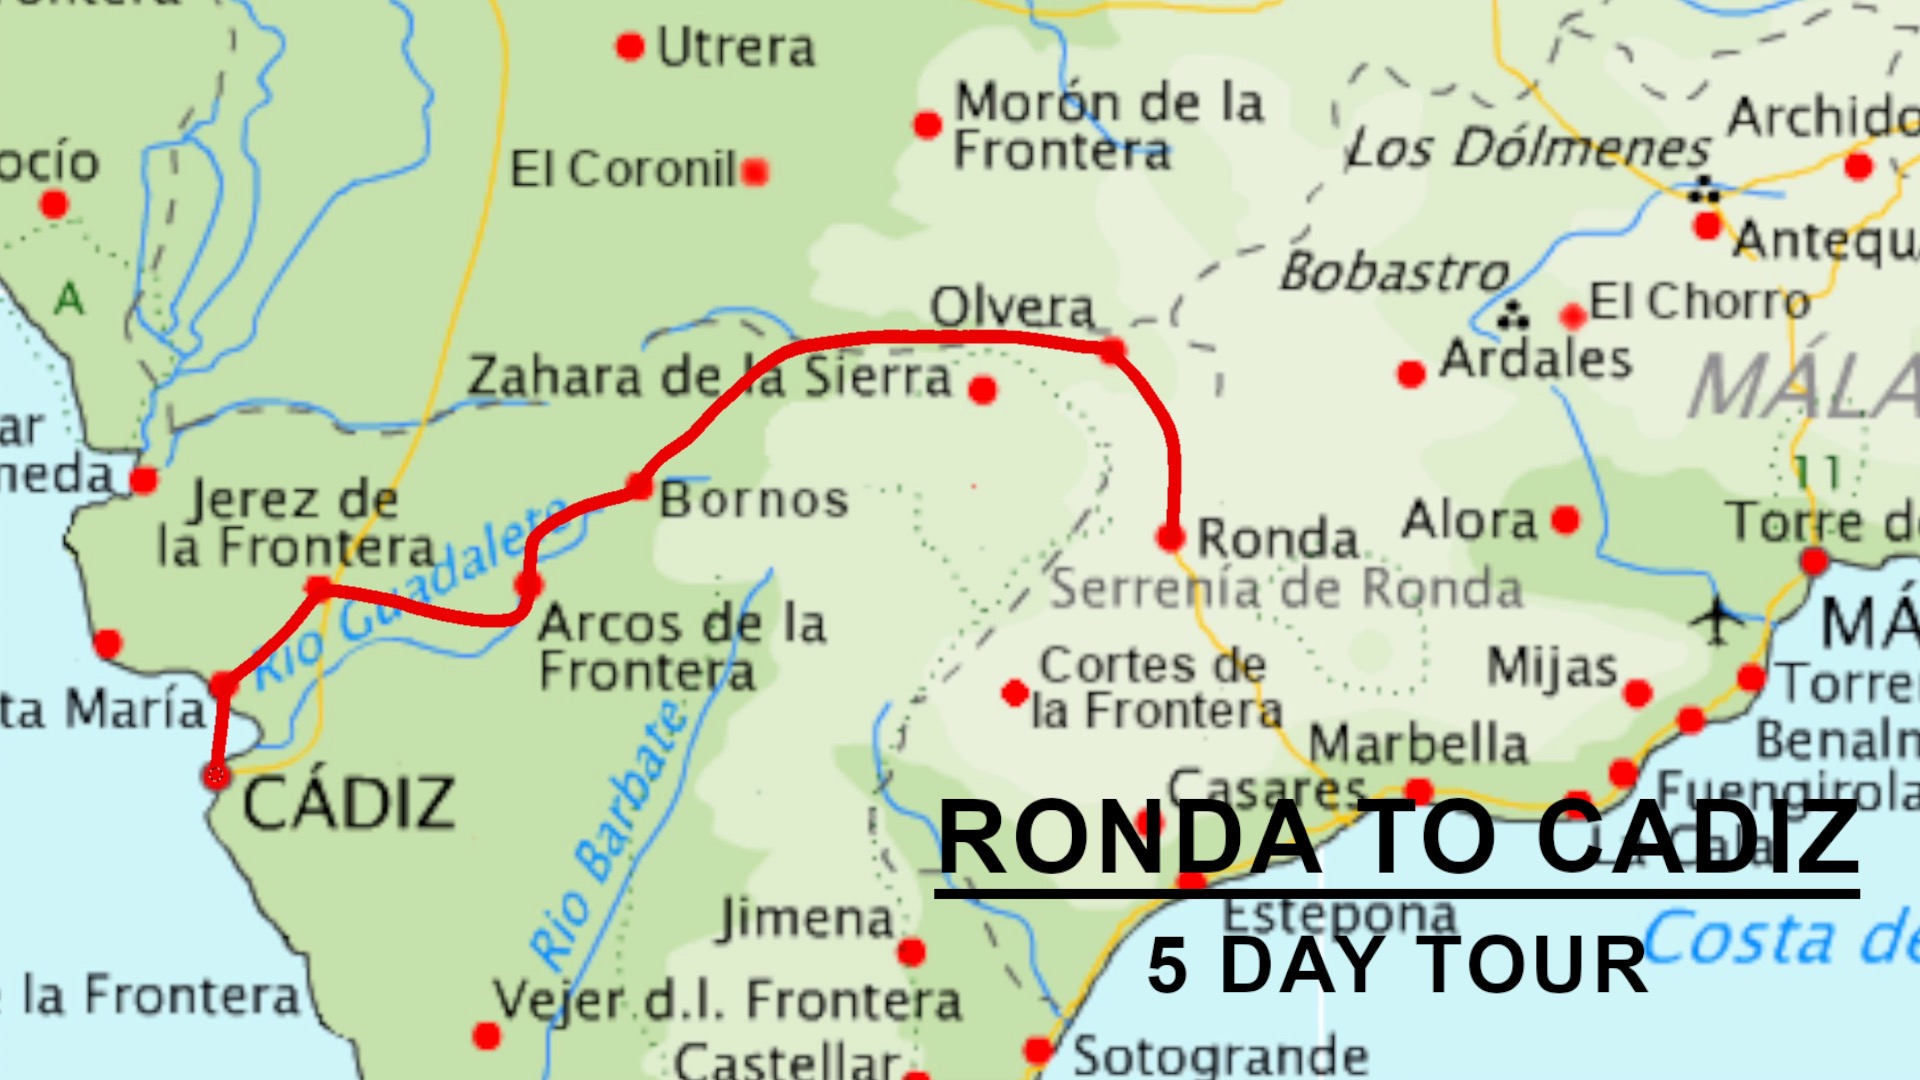 Ronda to Cadiz cycling tour spain map